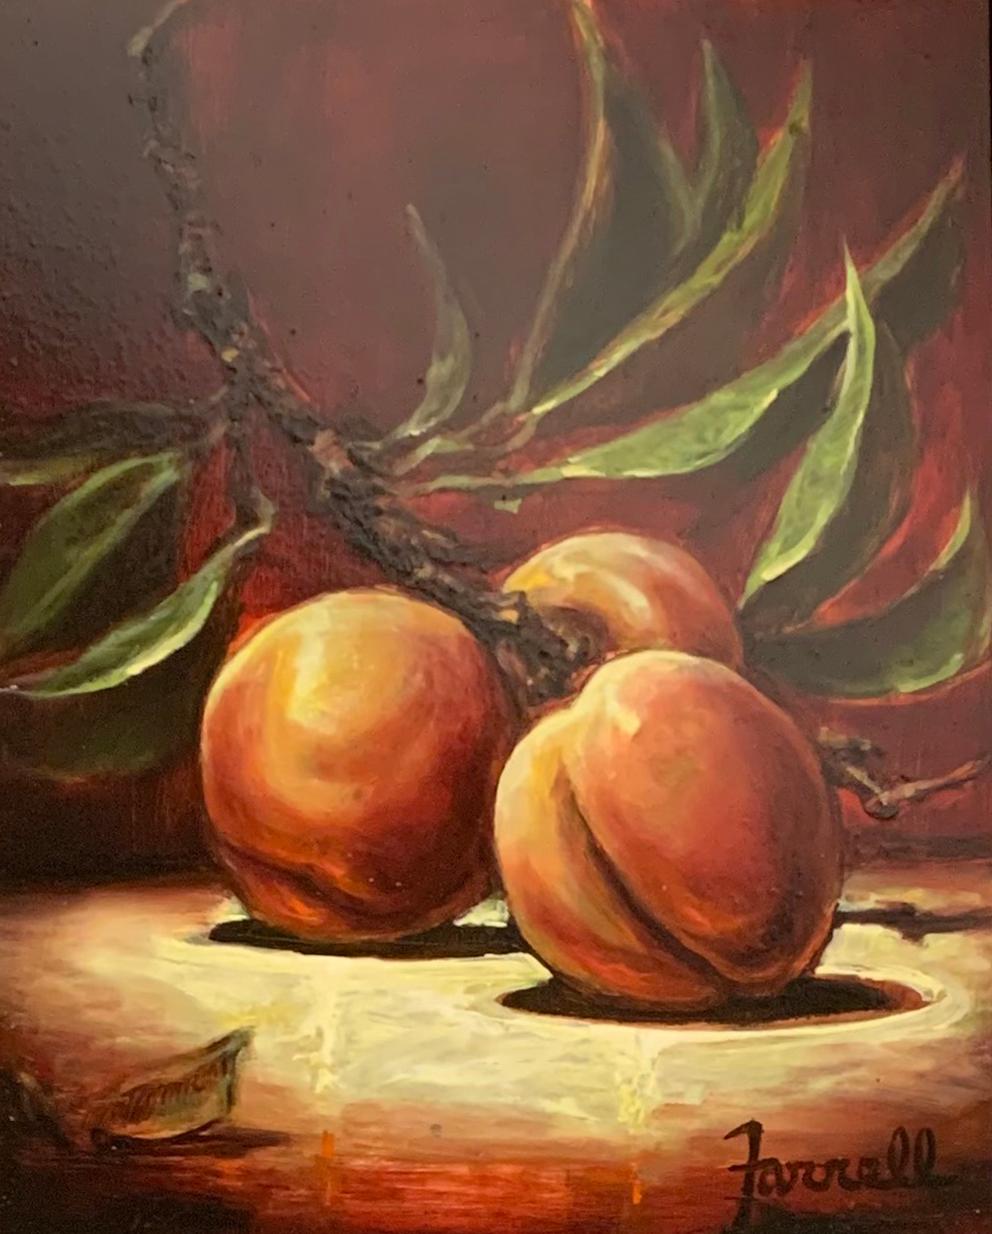 Sean Farrell, "Fresh Pick", 10x8 Peach Fruit Still Life Oil Painting on Board